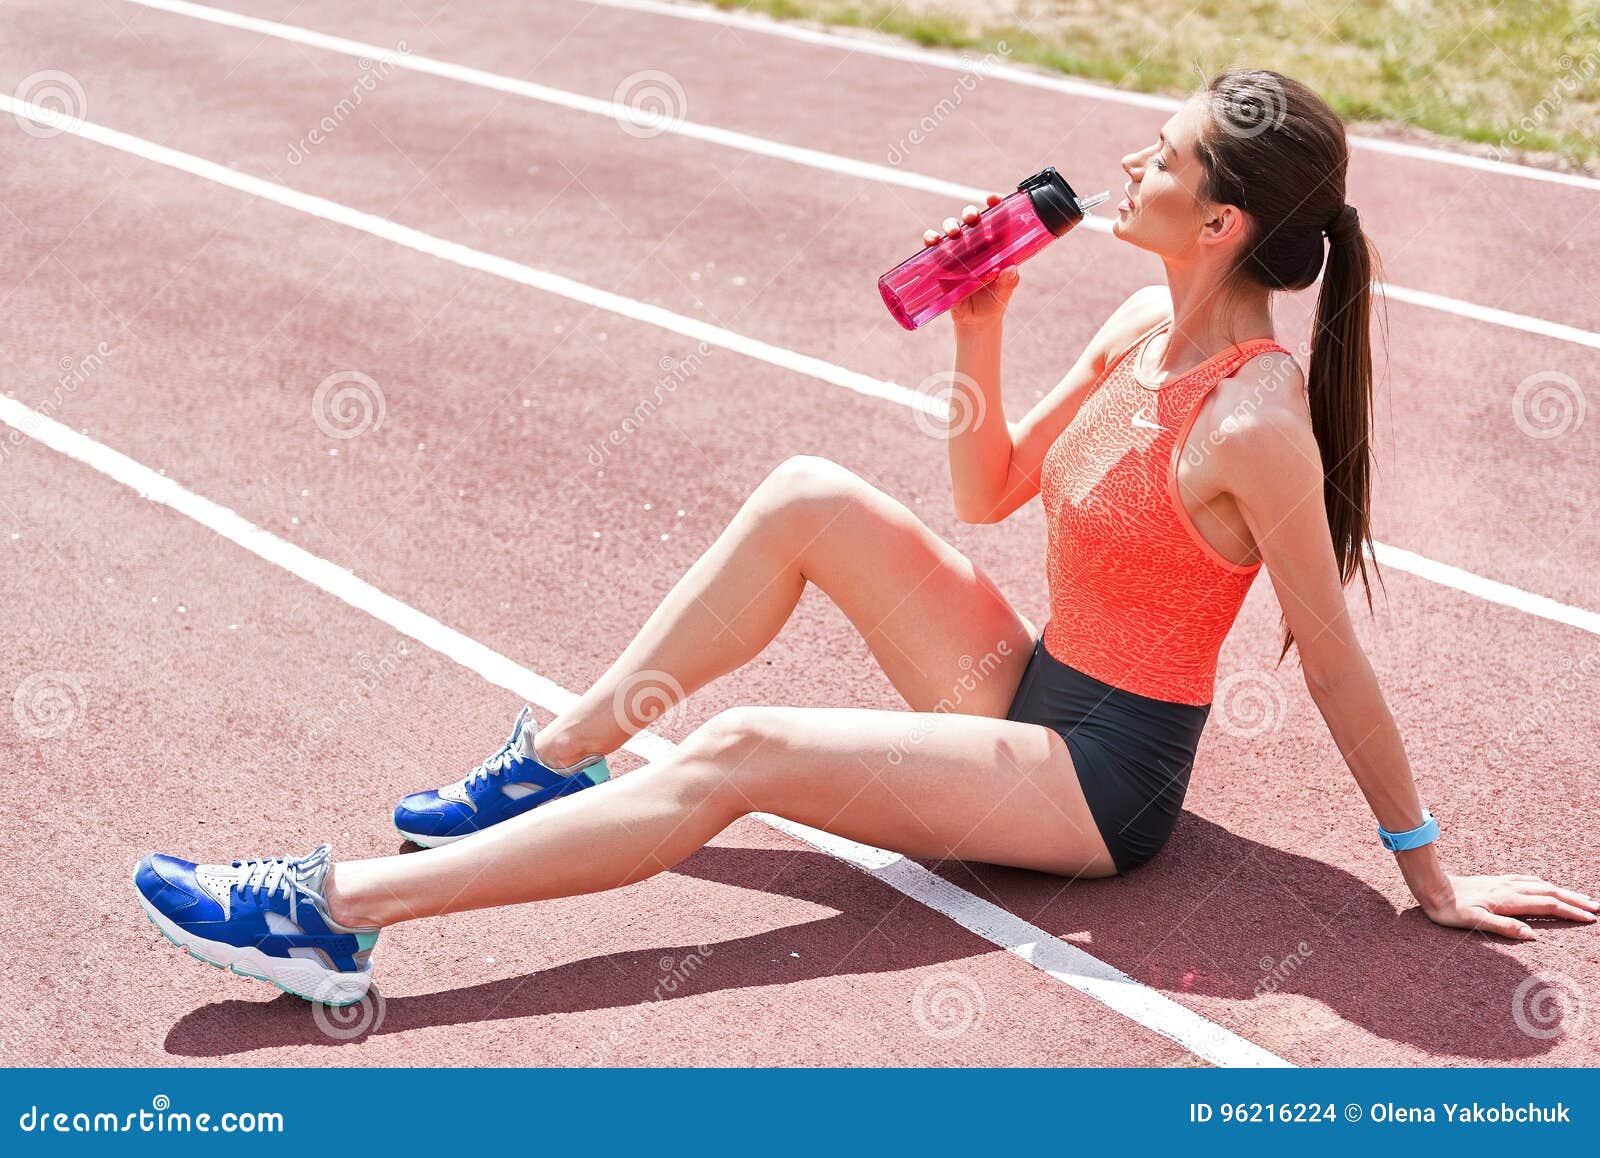 Fit me sport. Девушка после бега. Спортивные девушки после бега. Девушка сидит после пробежки. Уверенная девушка на пробежке.